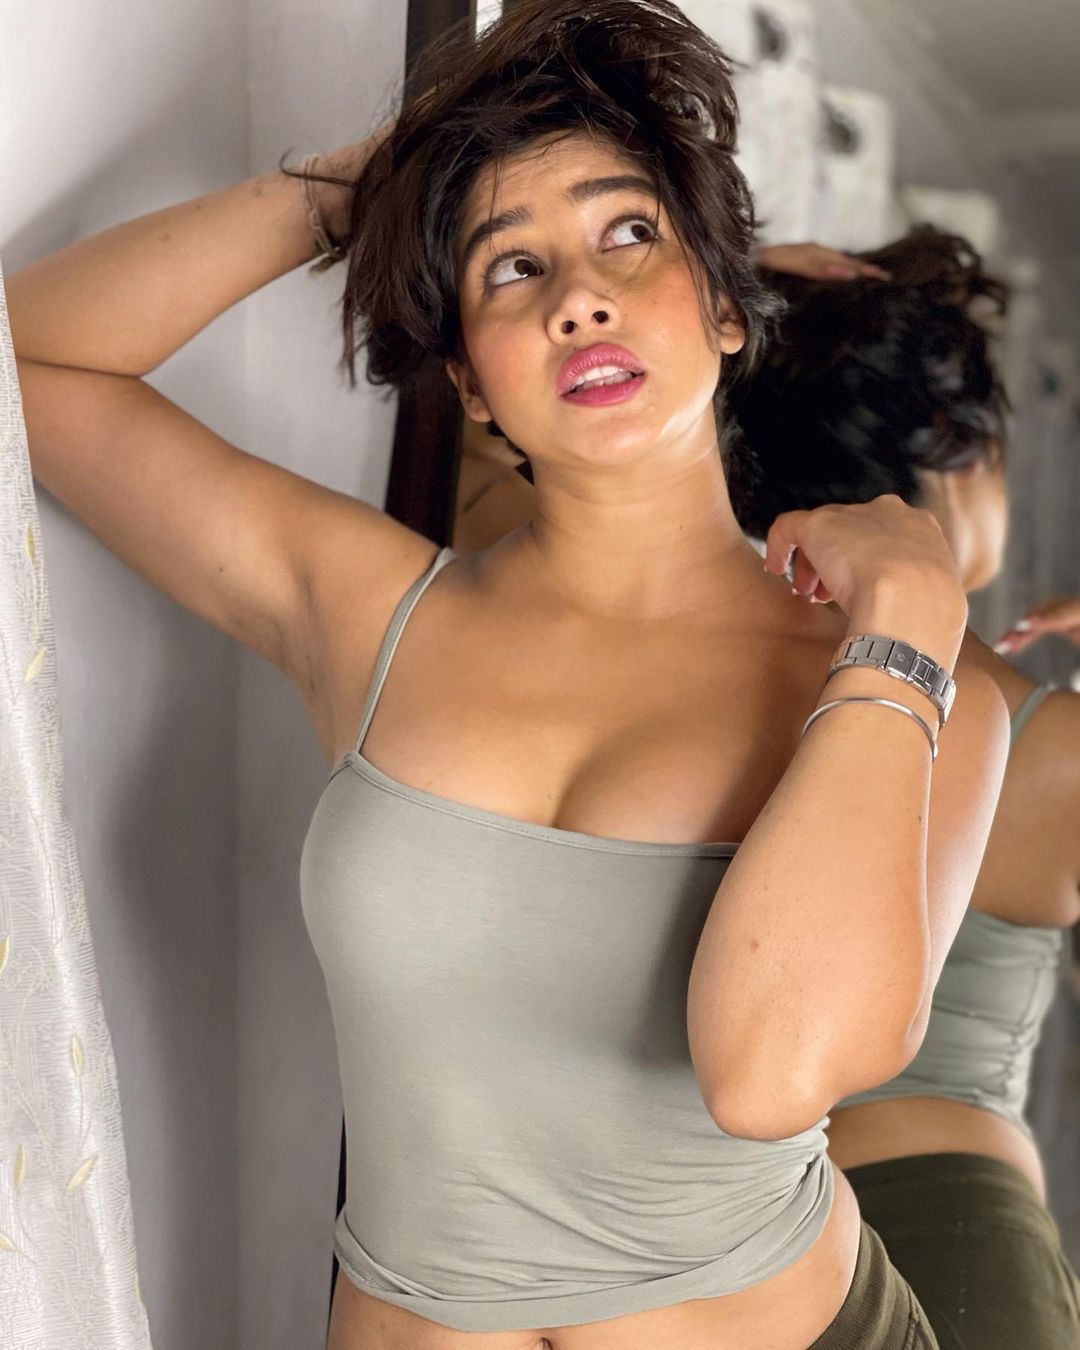 Sofia Ansari - Hot, sexy and beautiful